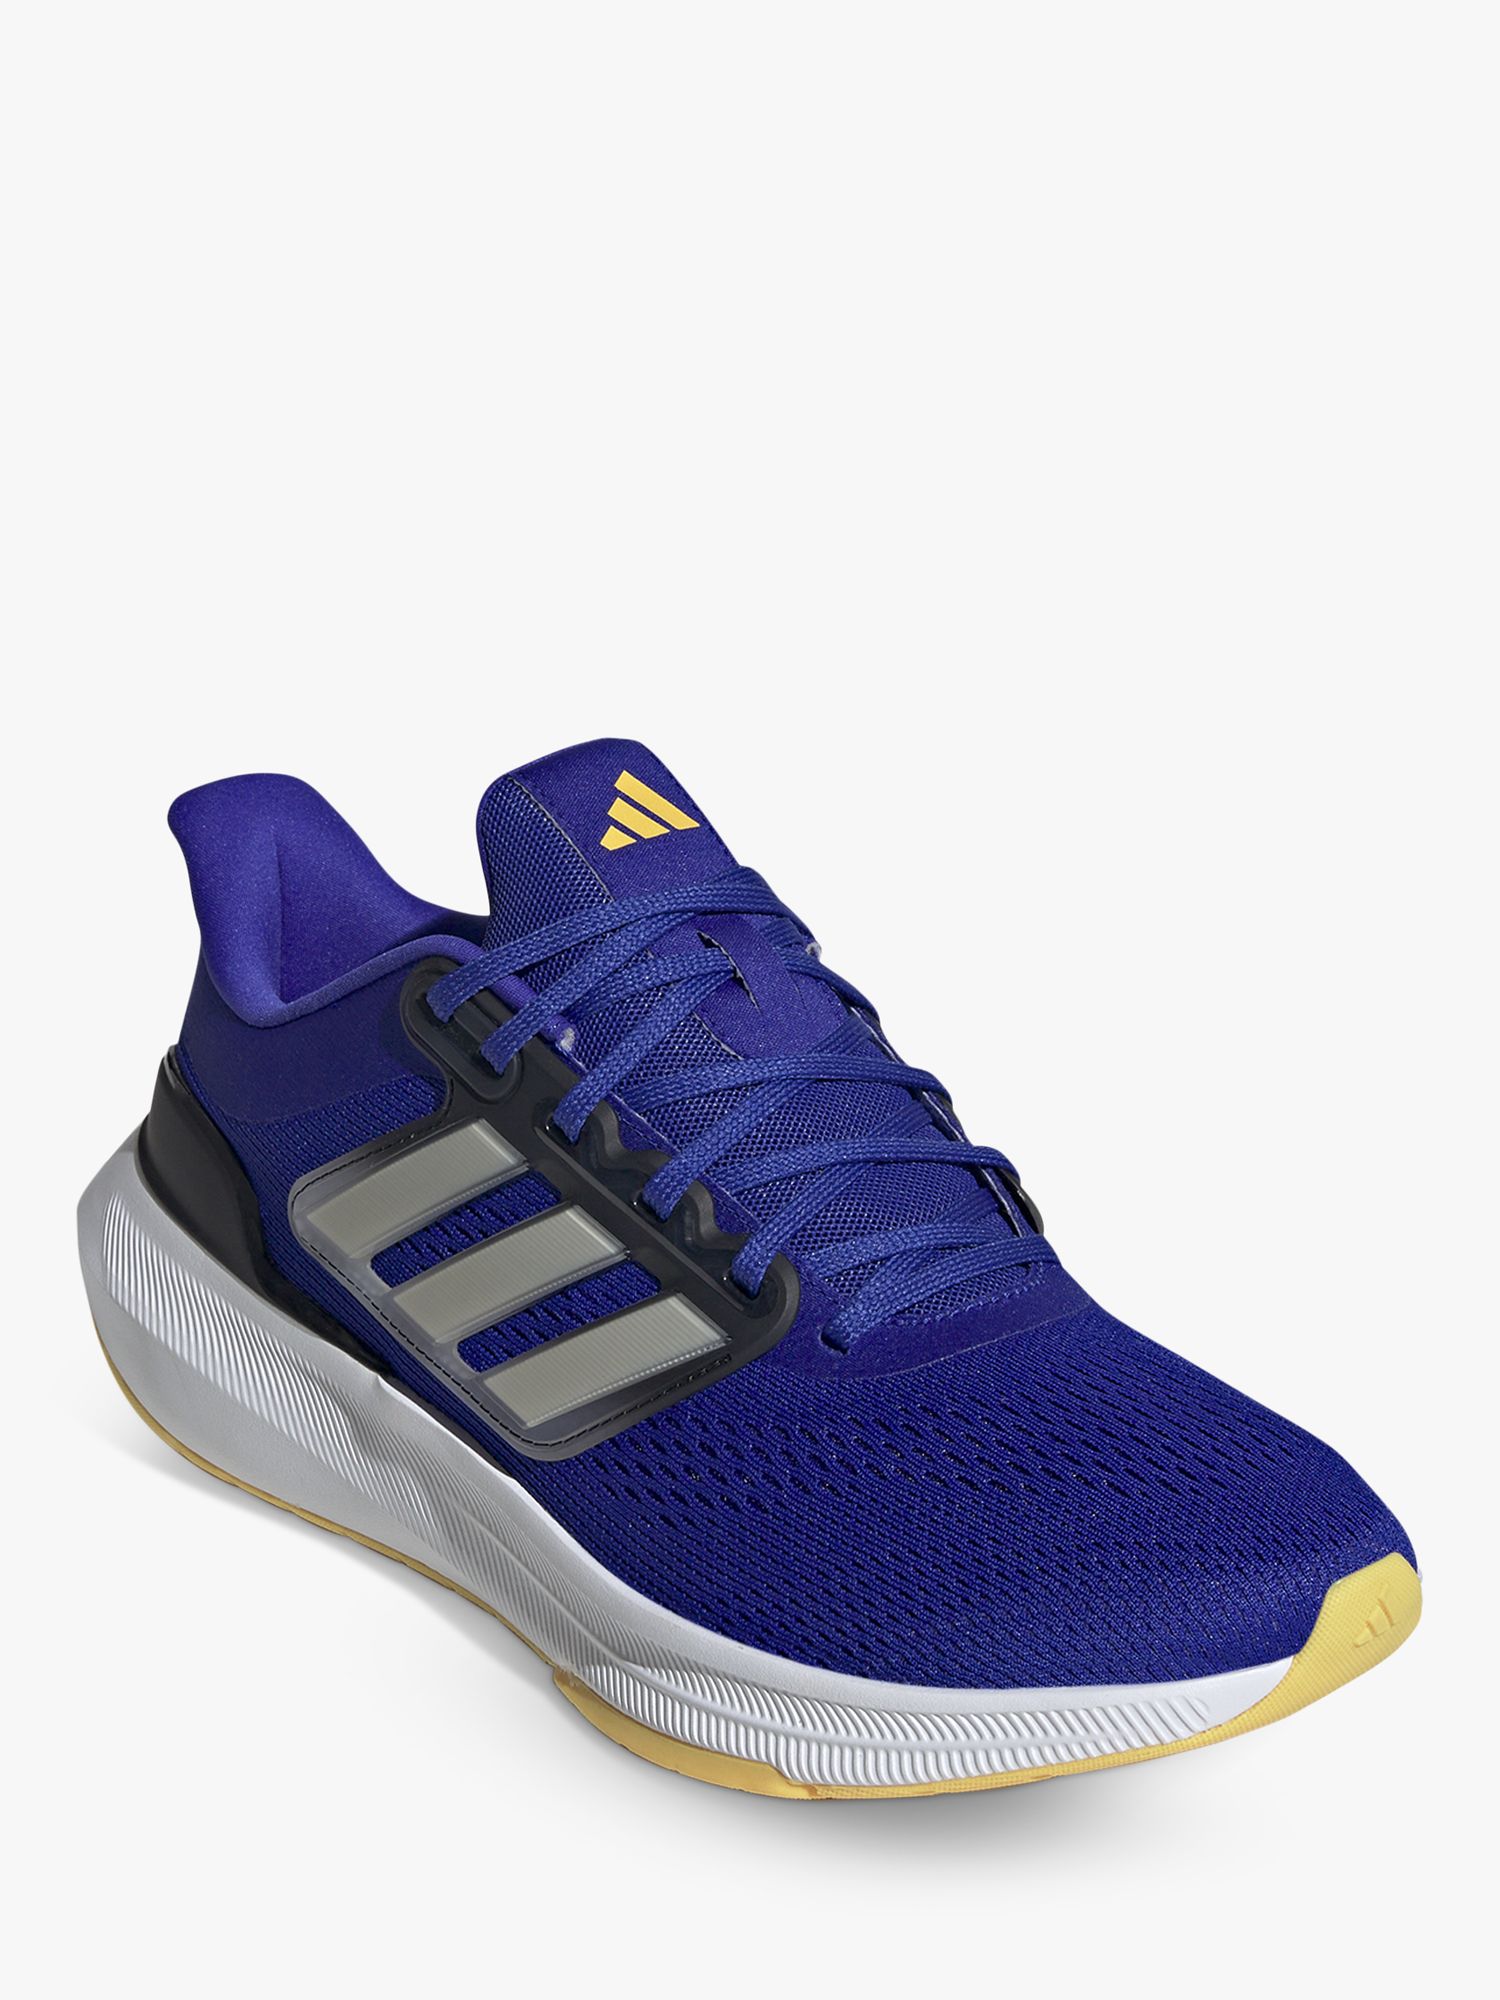 adidas Ultrabounce Men's Running Shoes, Lucid Blue/Grey, 7